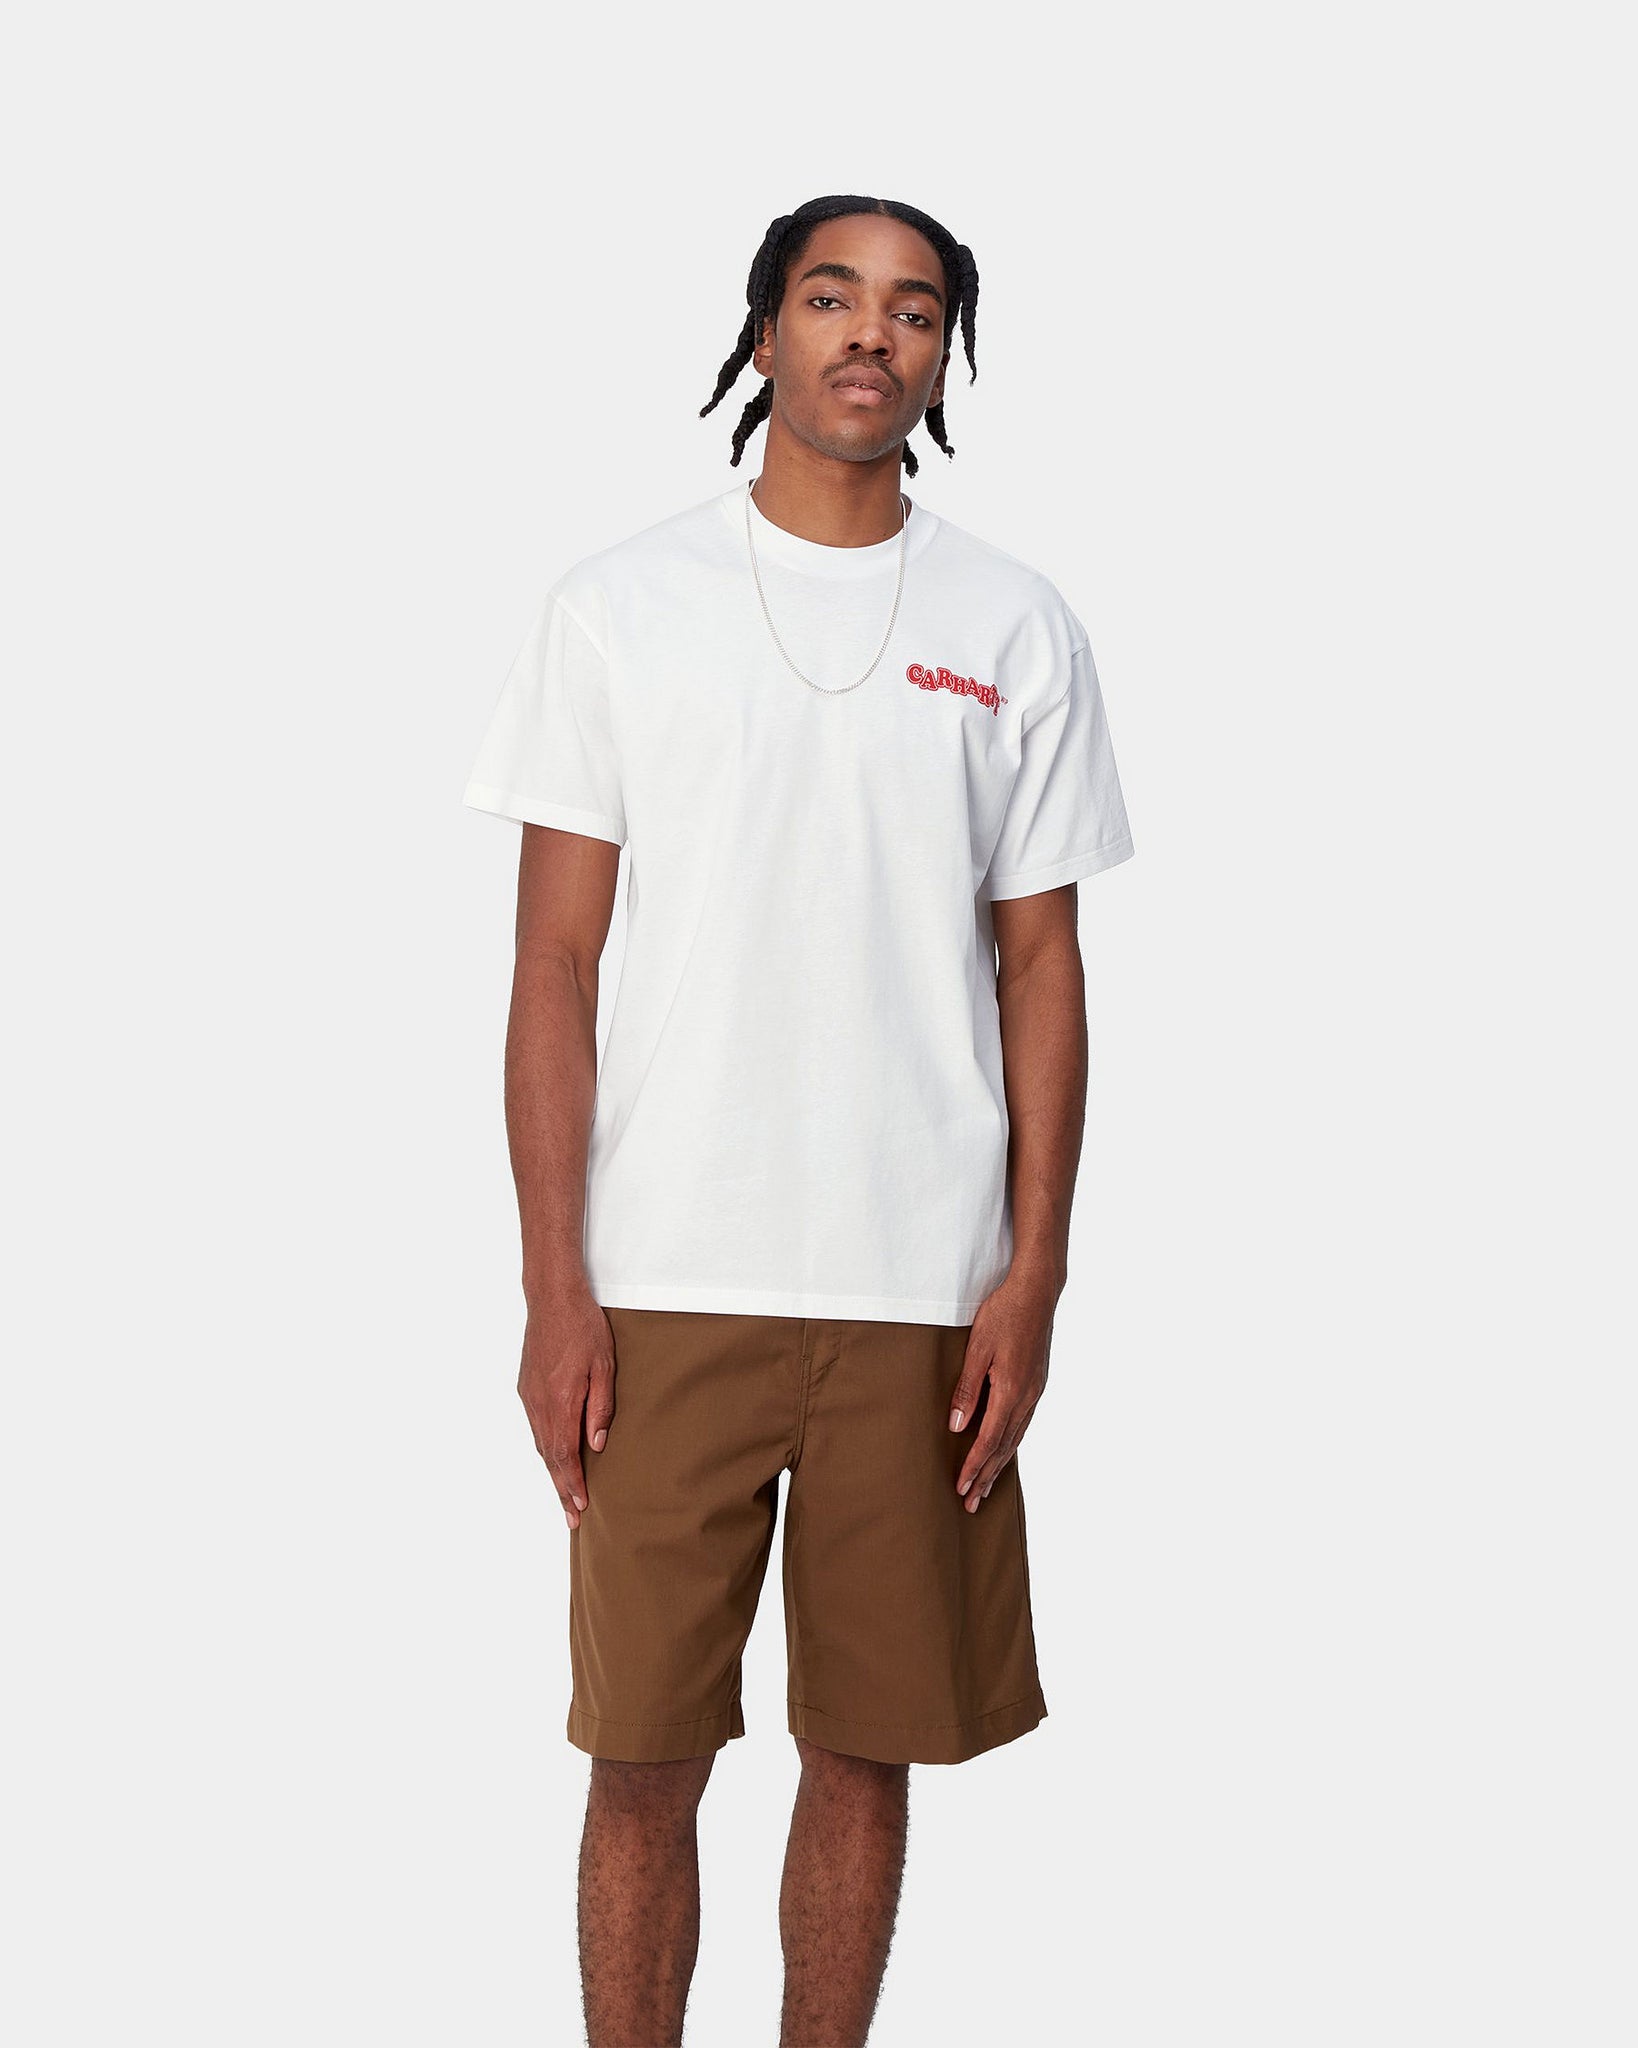 Camiseta S/S Fast Food - White/Red